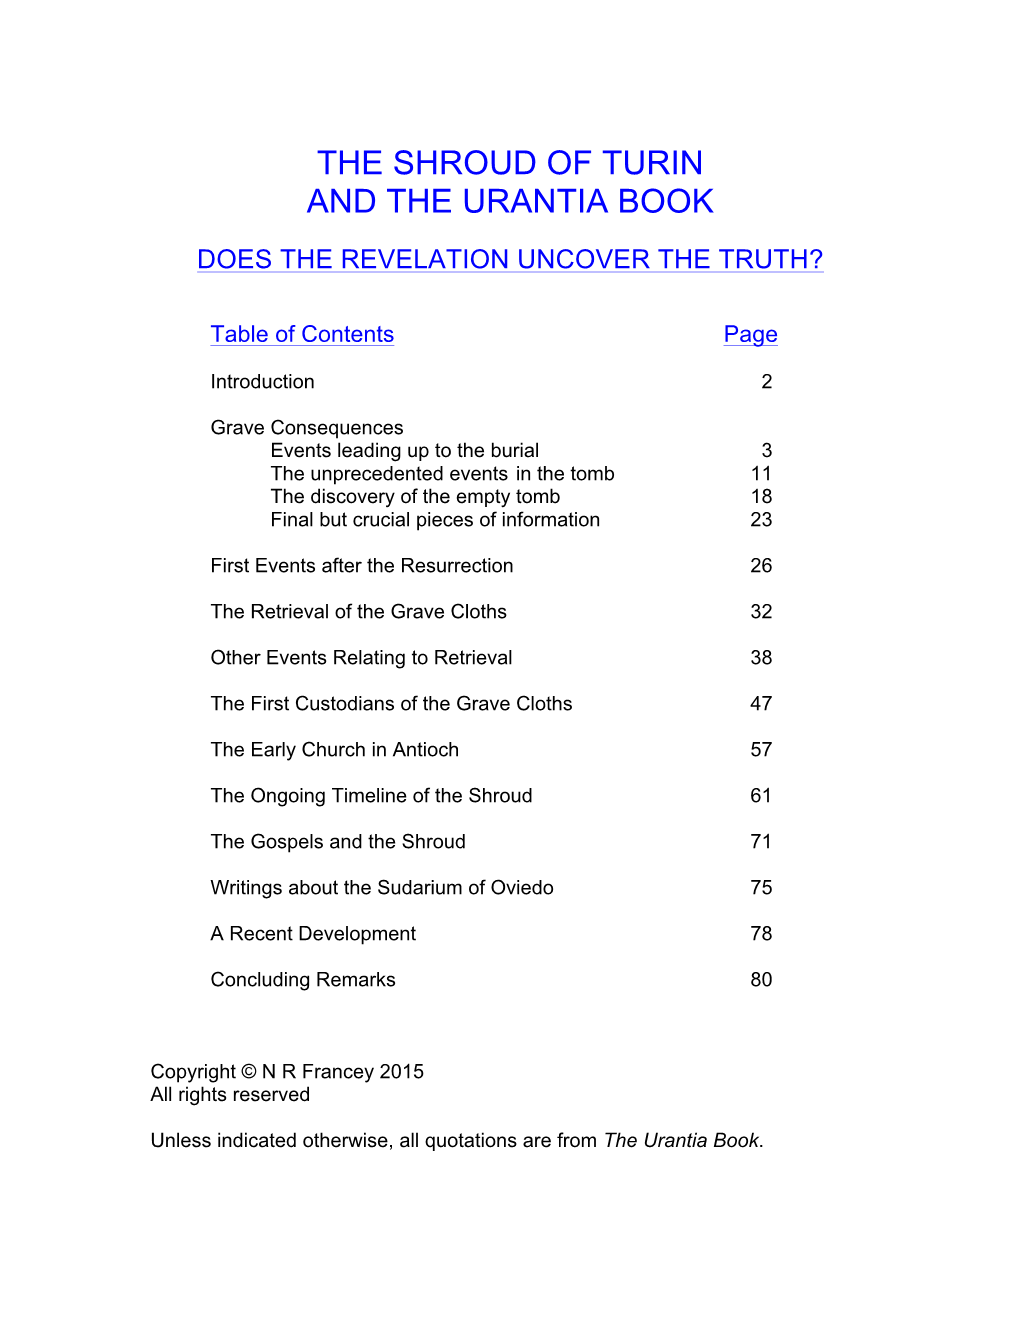 The Shroud of Turin and the Urantia Book